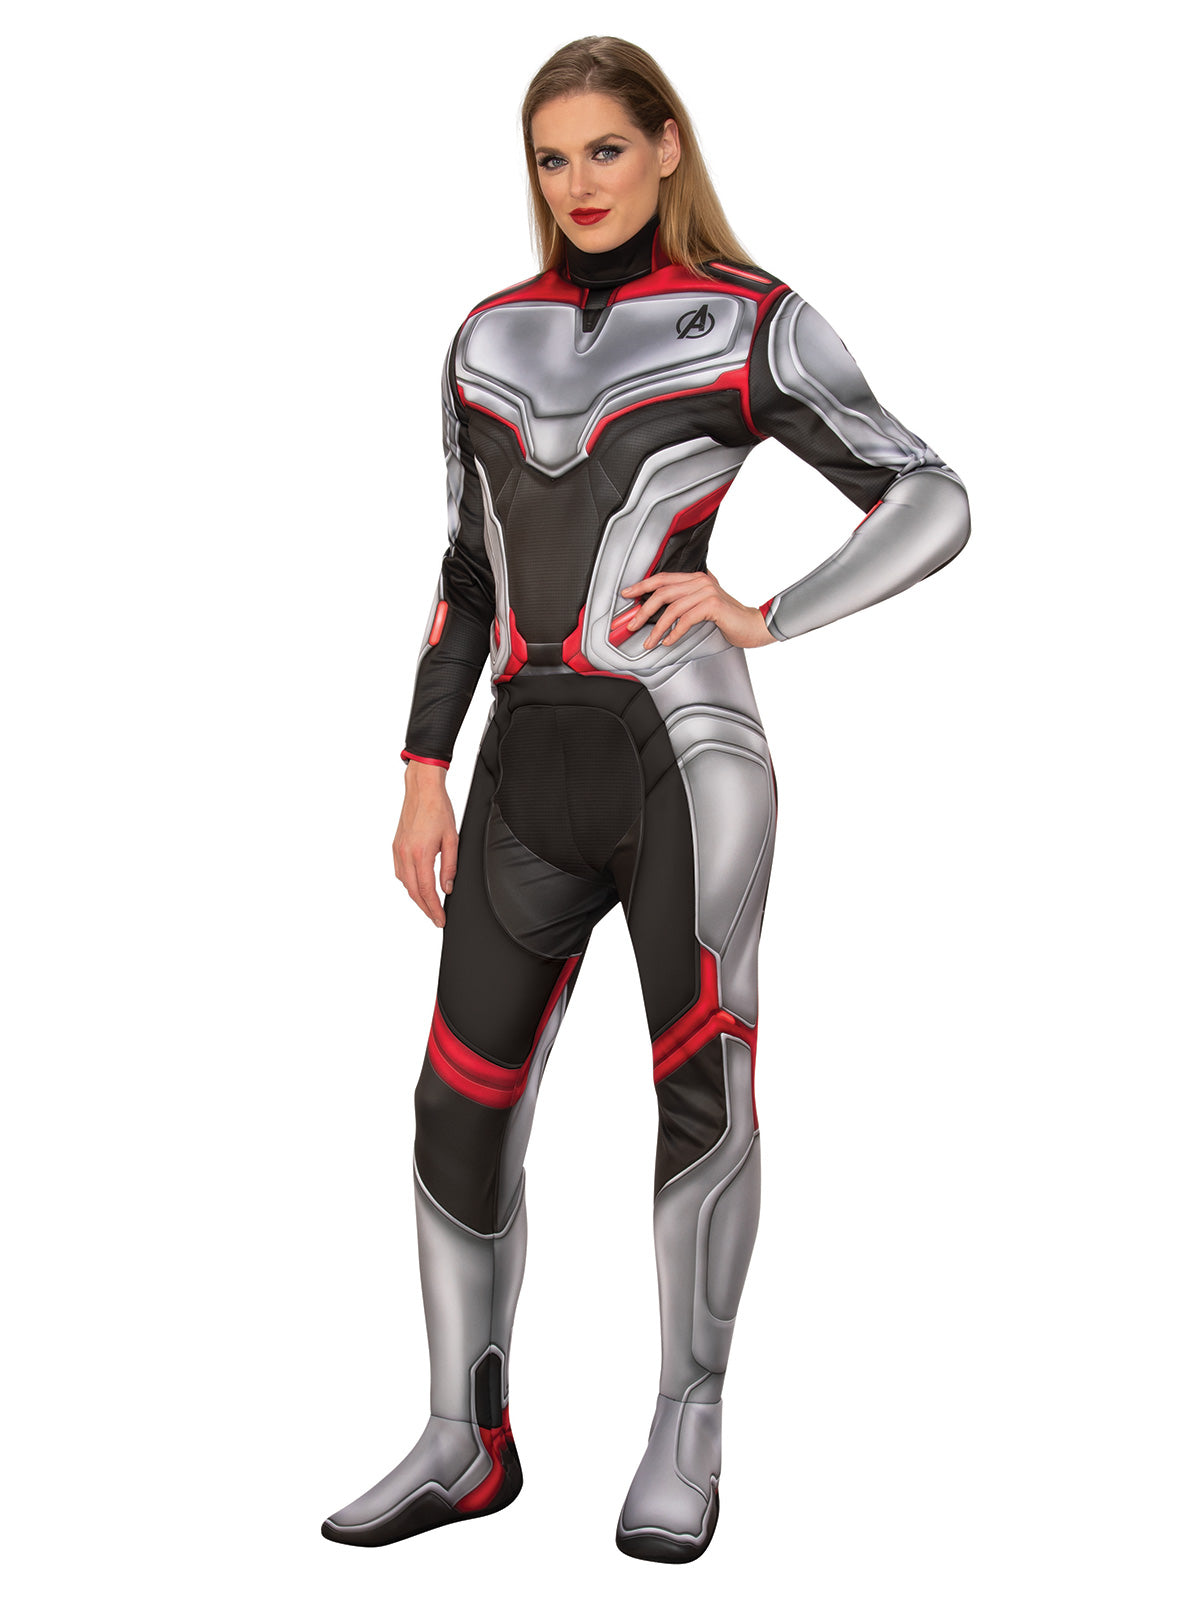 Rubies Avengers 4 Deluxe Team Suit Avengers Adult Unisex Costume (Size XL)